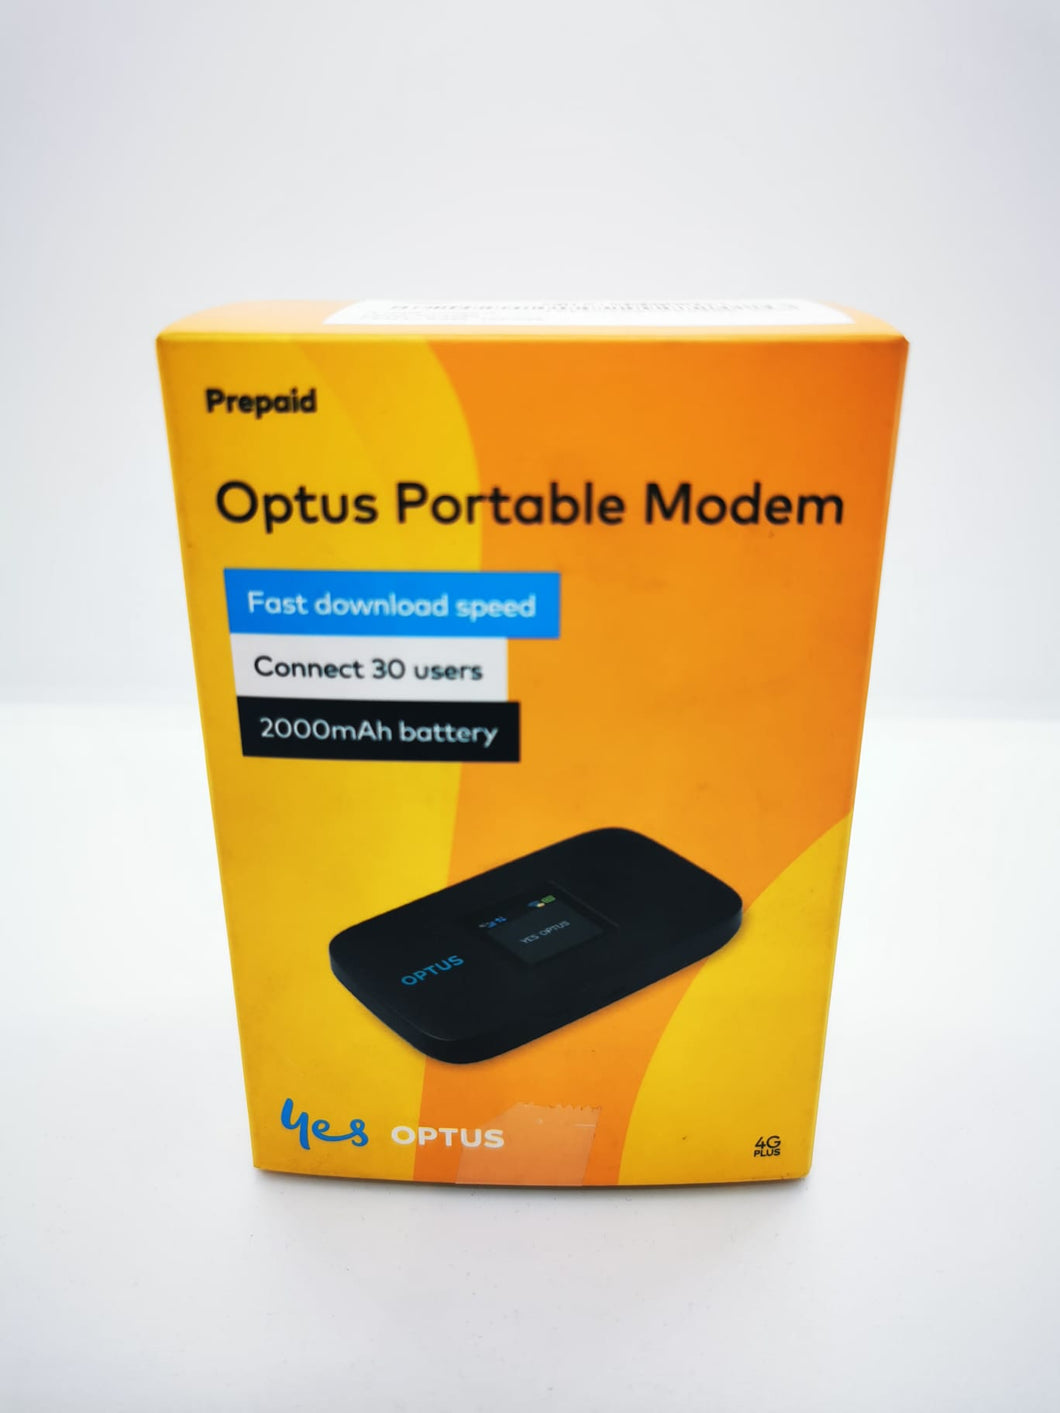 Prepaid Optus Portable Modem - Black